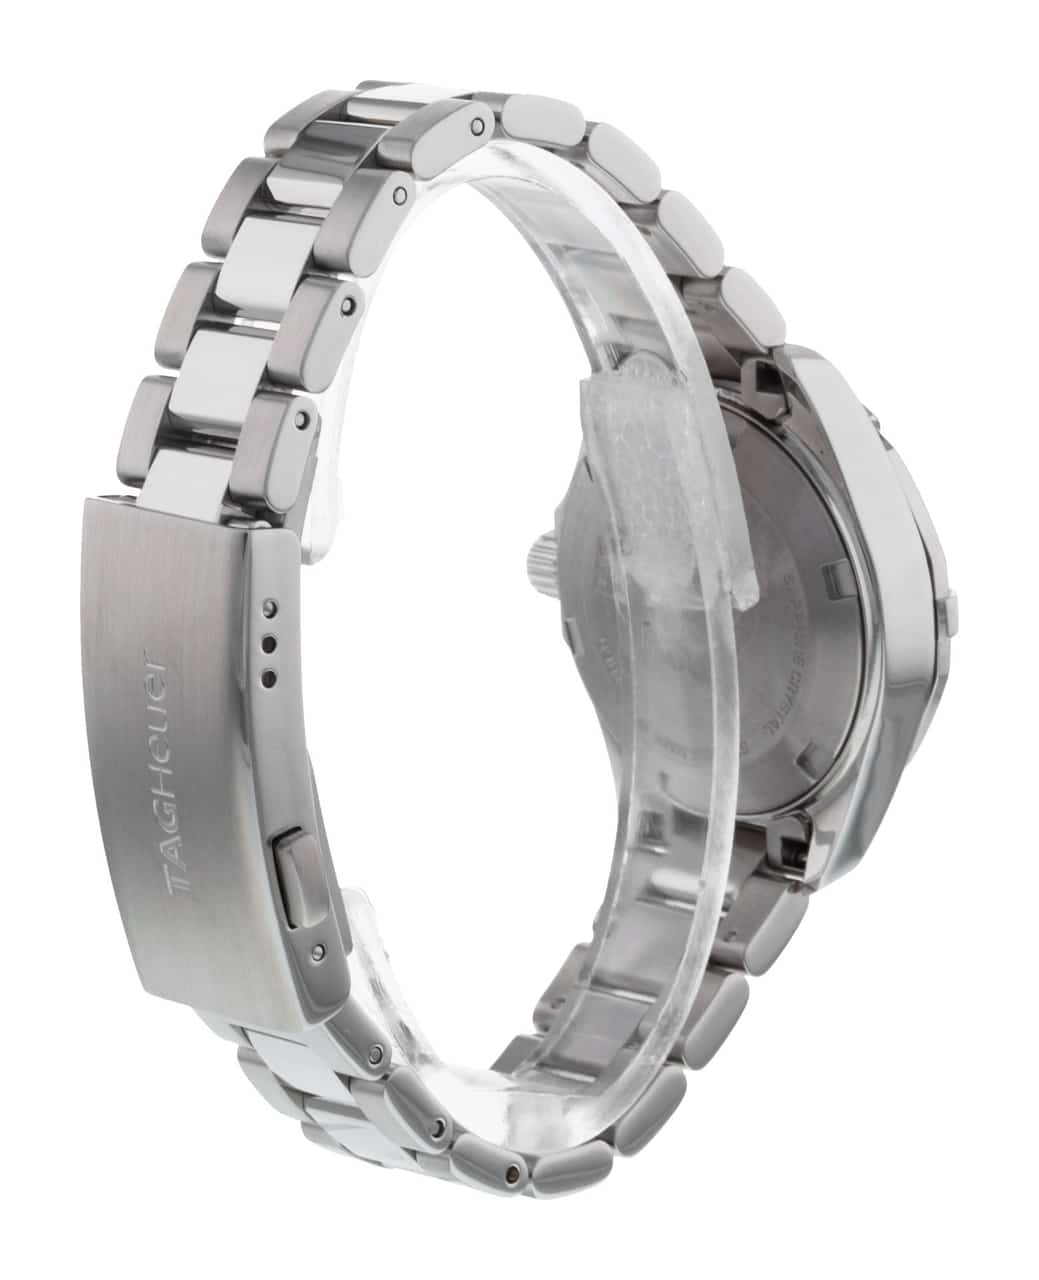 Tag Heuer Aquaracer Quartz Black Dial Silver Steel Strap Watch for Men - WBD1410.BA0741